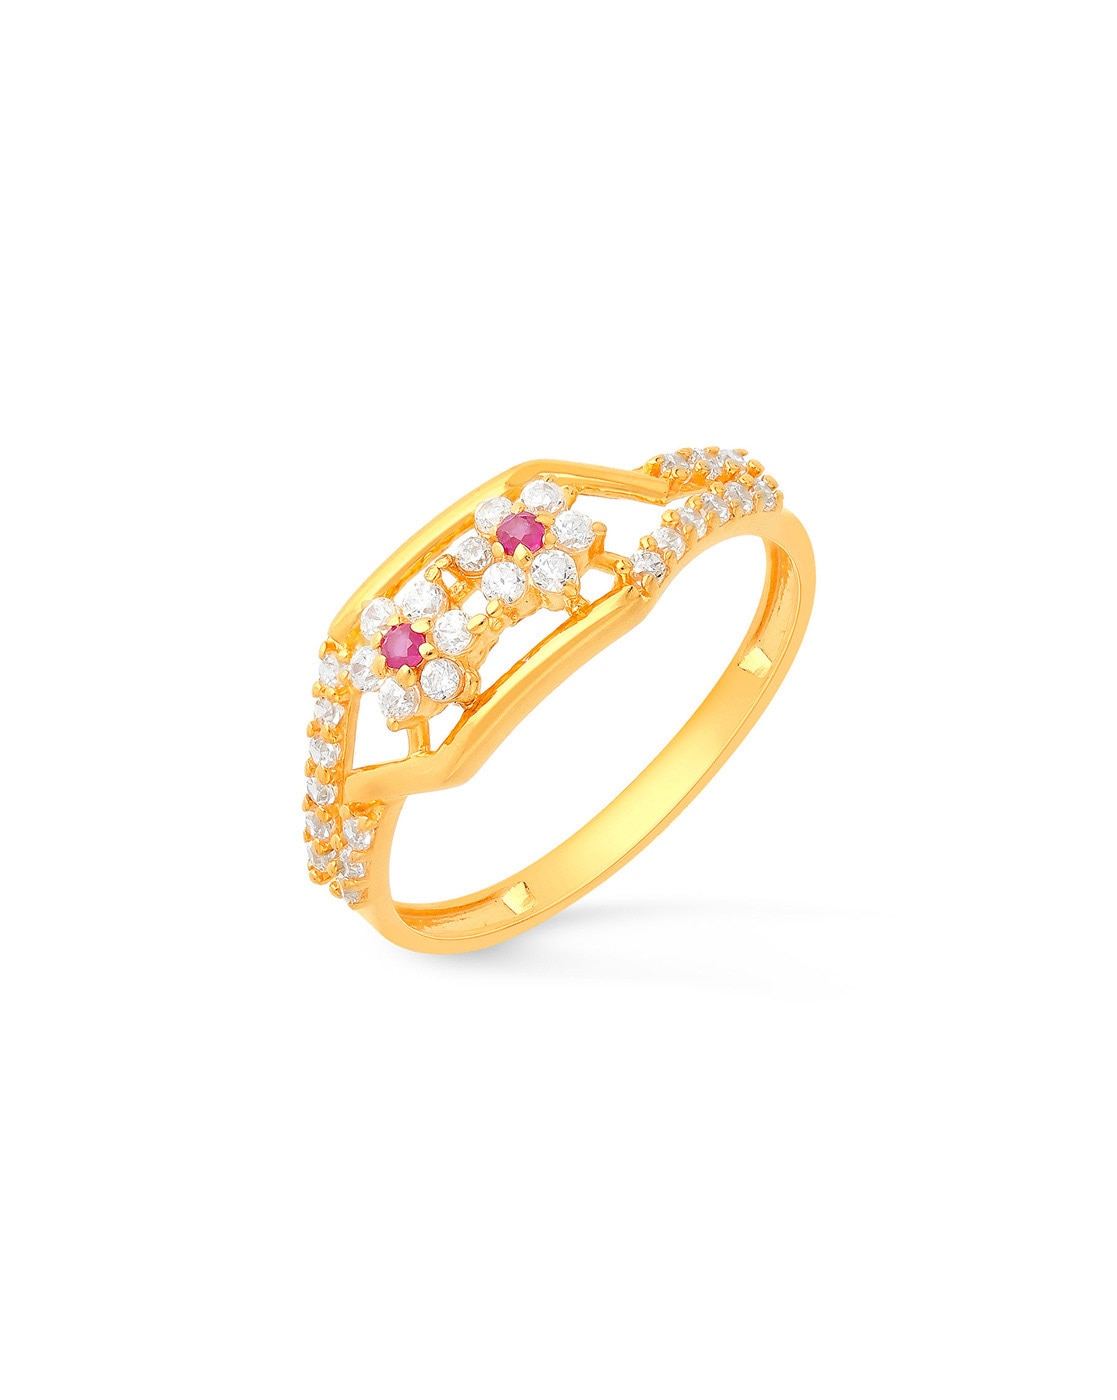 Buy Malabar Gold Ring RG9496746 for Men Online | Malabar Gold & Diamonds